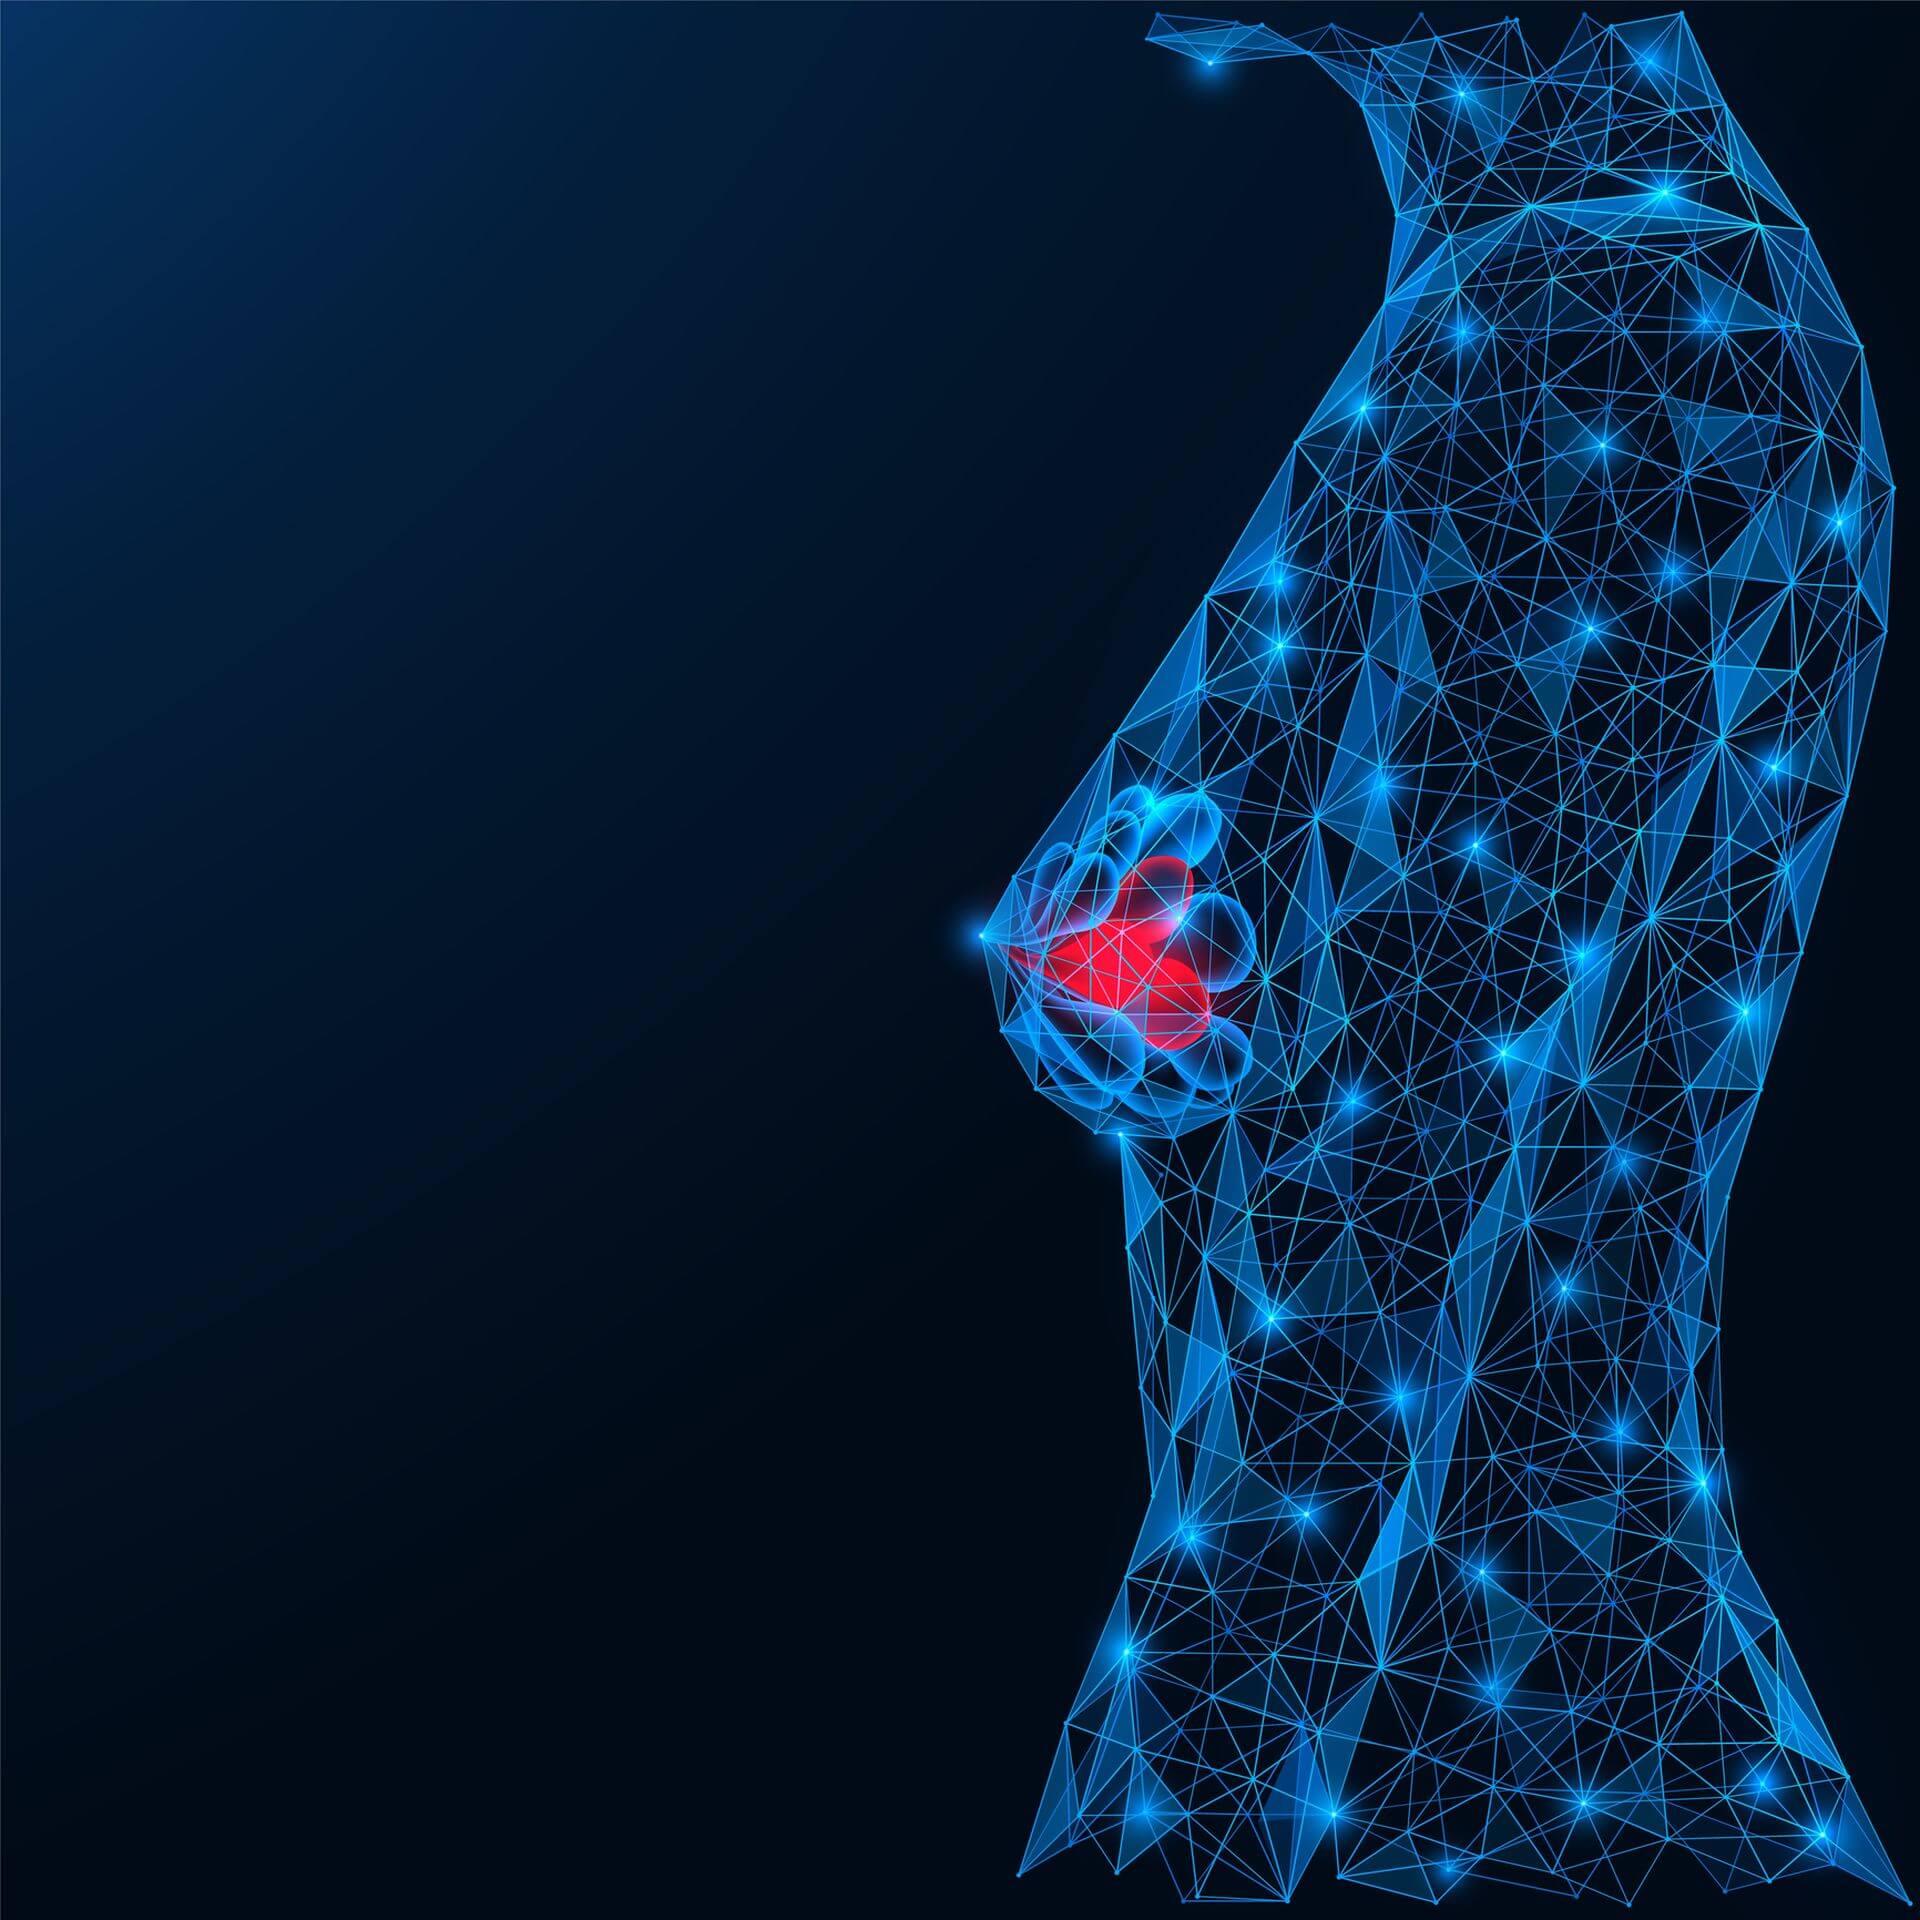 Zwei Studien bestätigen Trastuzumab-Deruxtecan beim fortgeschrittenen HER2-positiven Brustkrebs